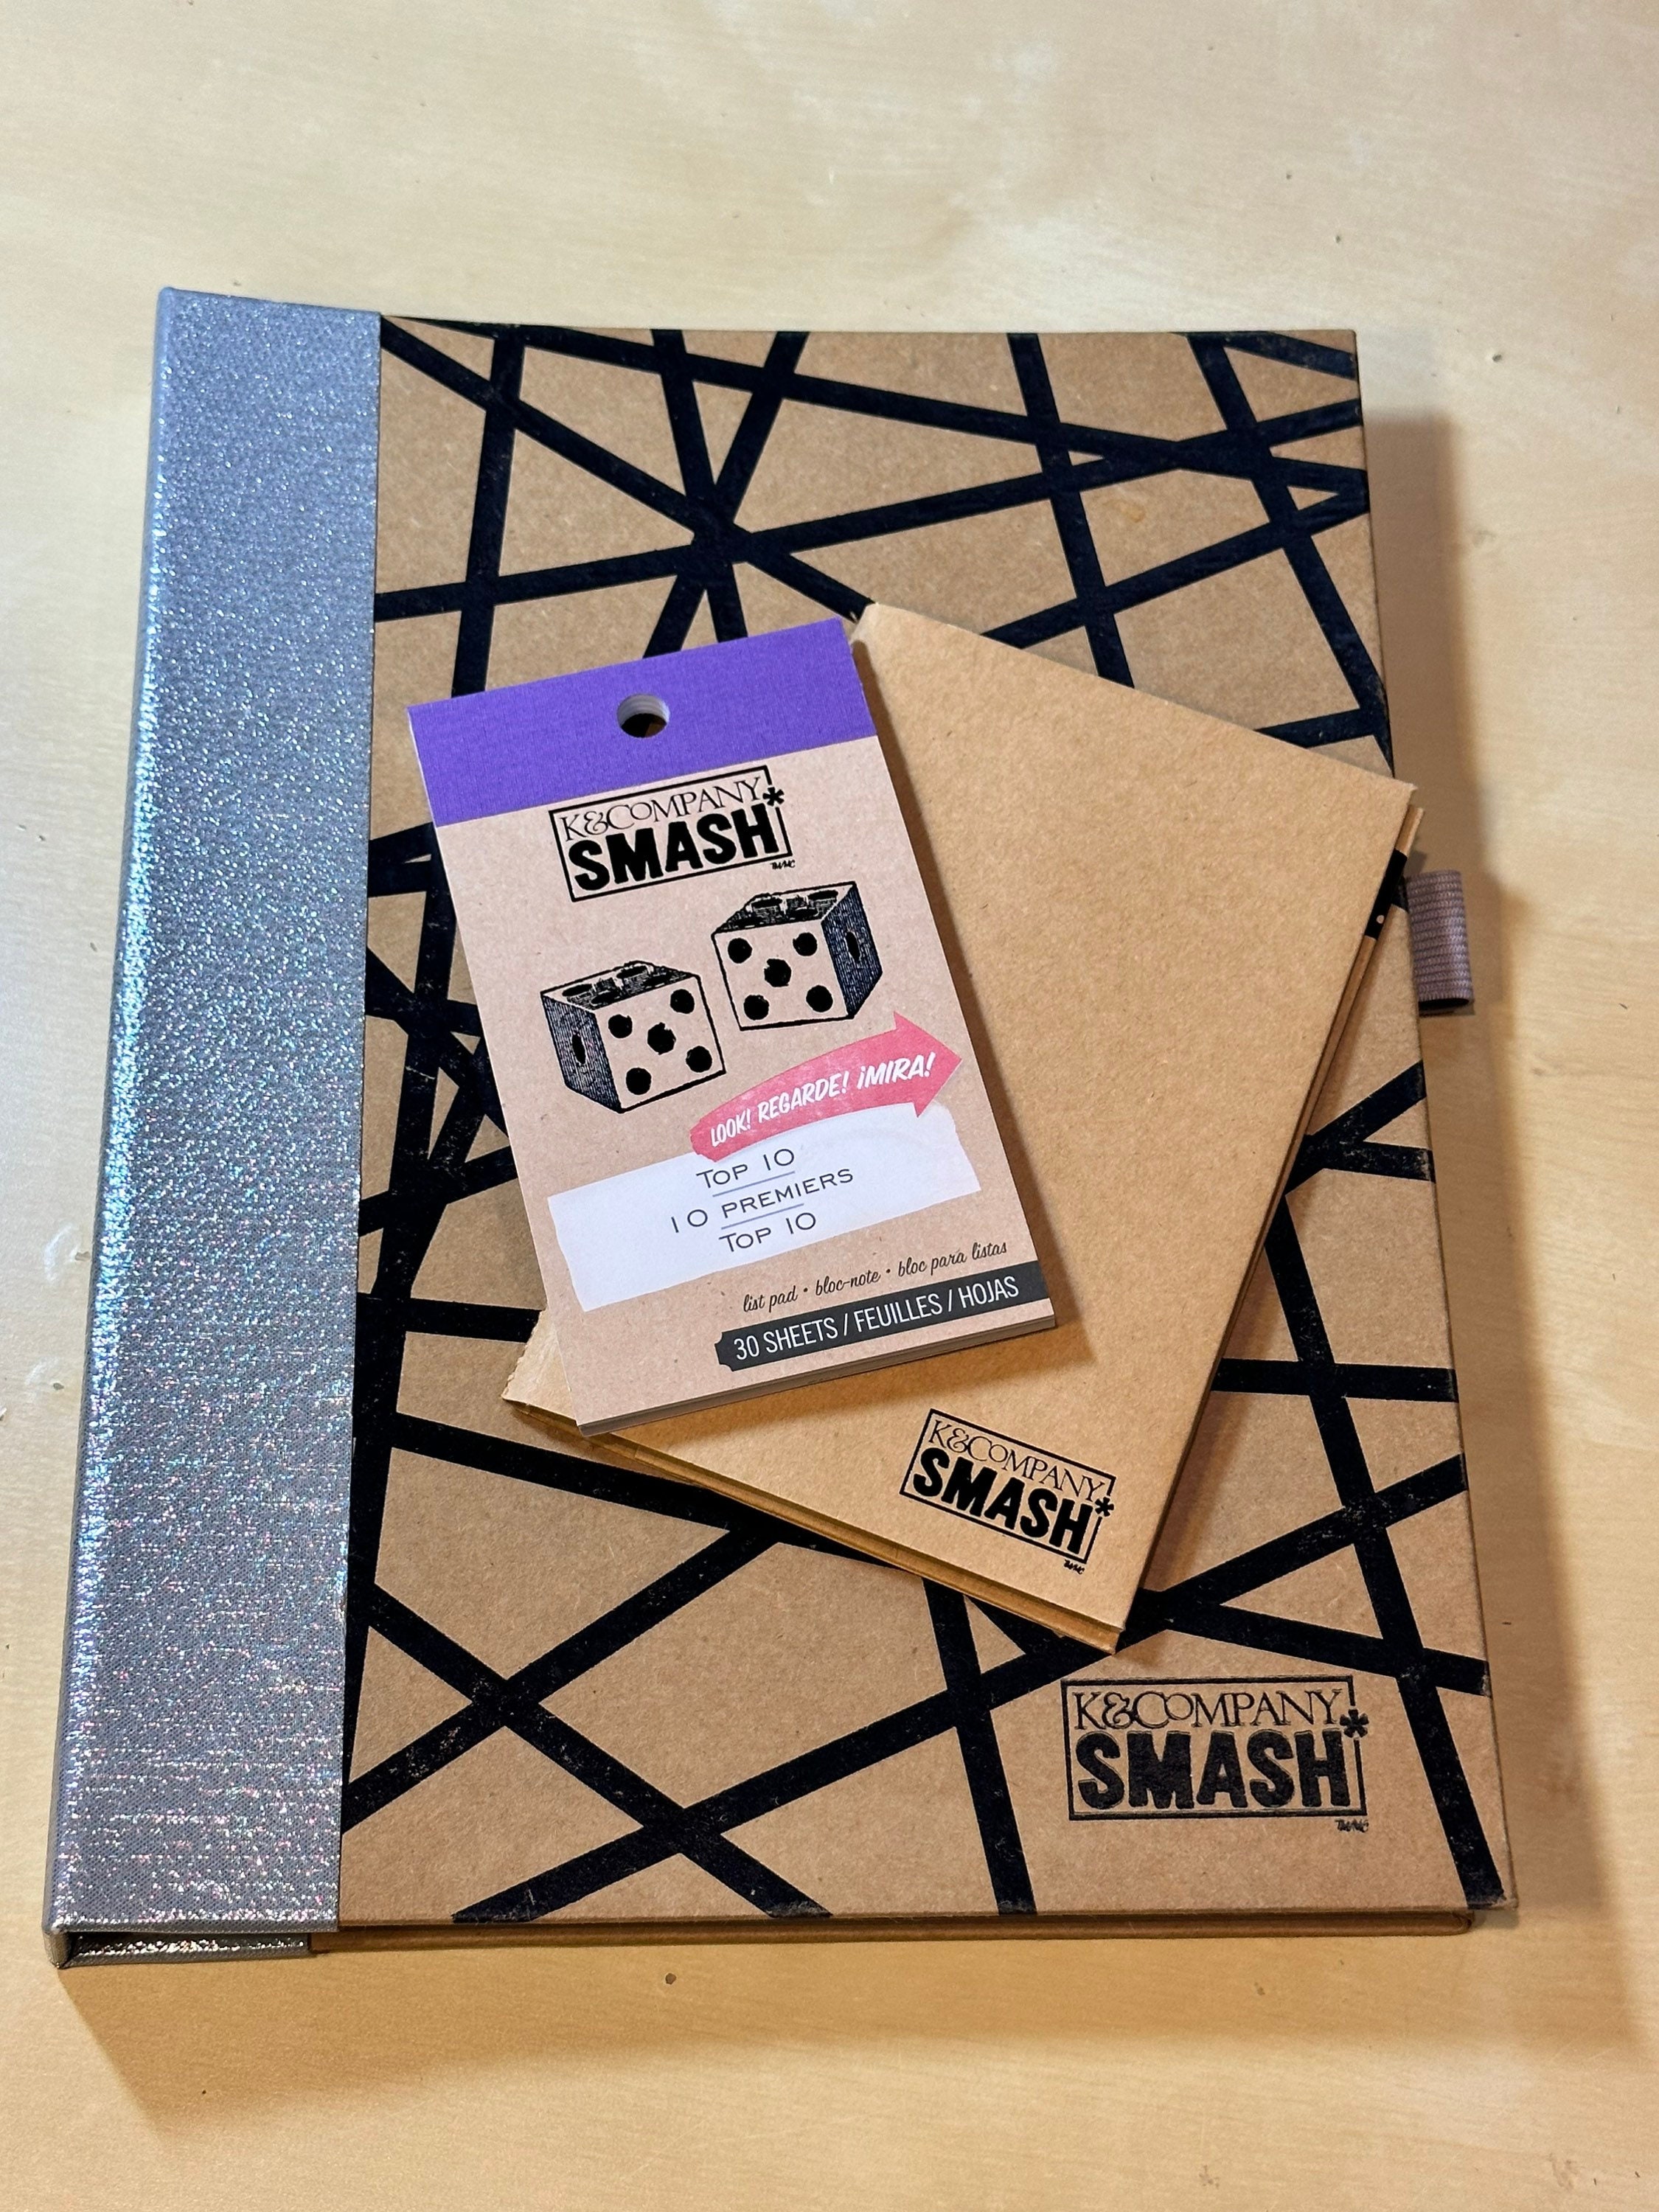 K&Company SMASH Book SET journal with Embellishments and mini smash book